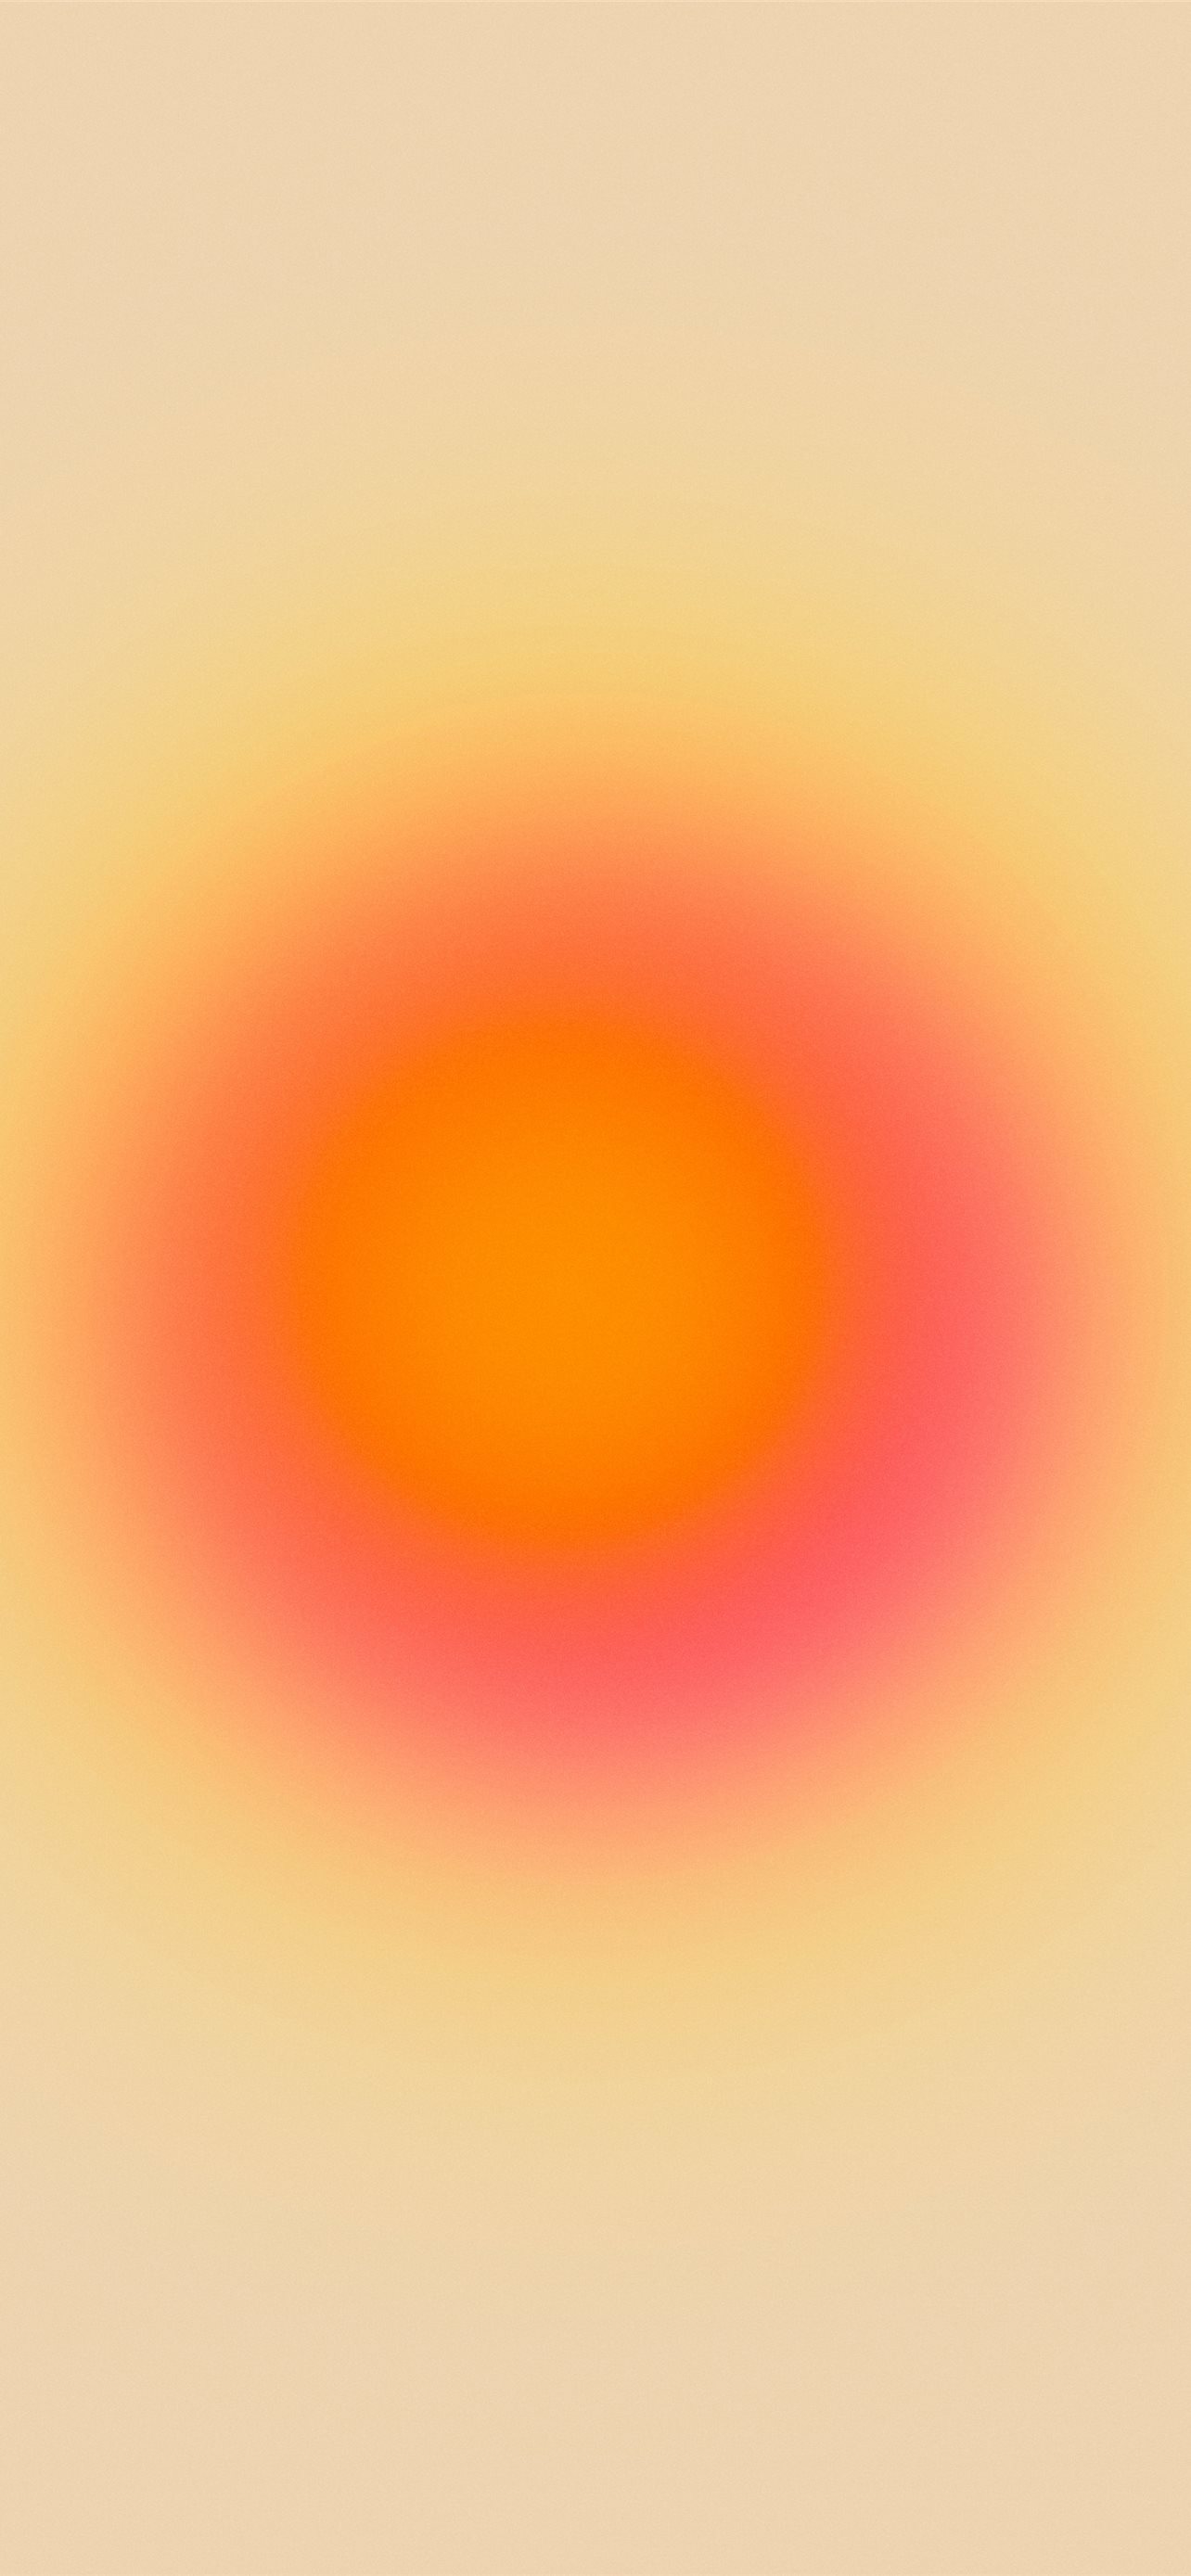 yellow and orange sun illustration iPhone Wallpaper Free Download